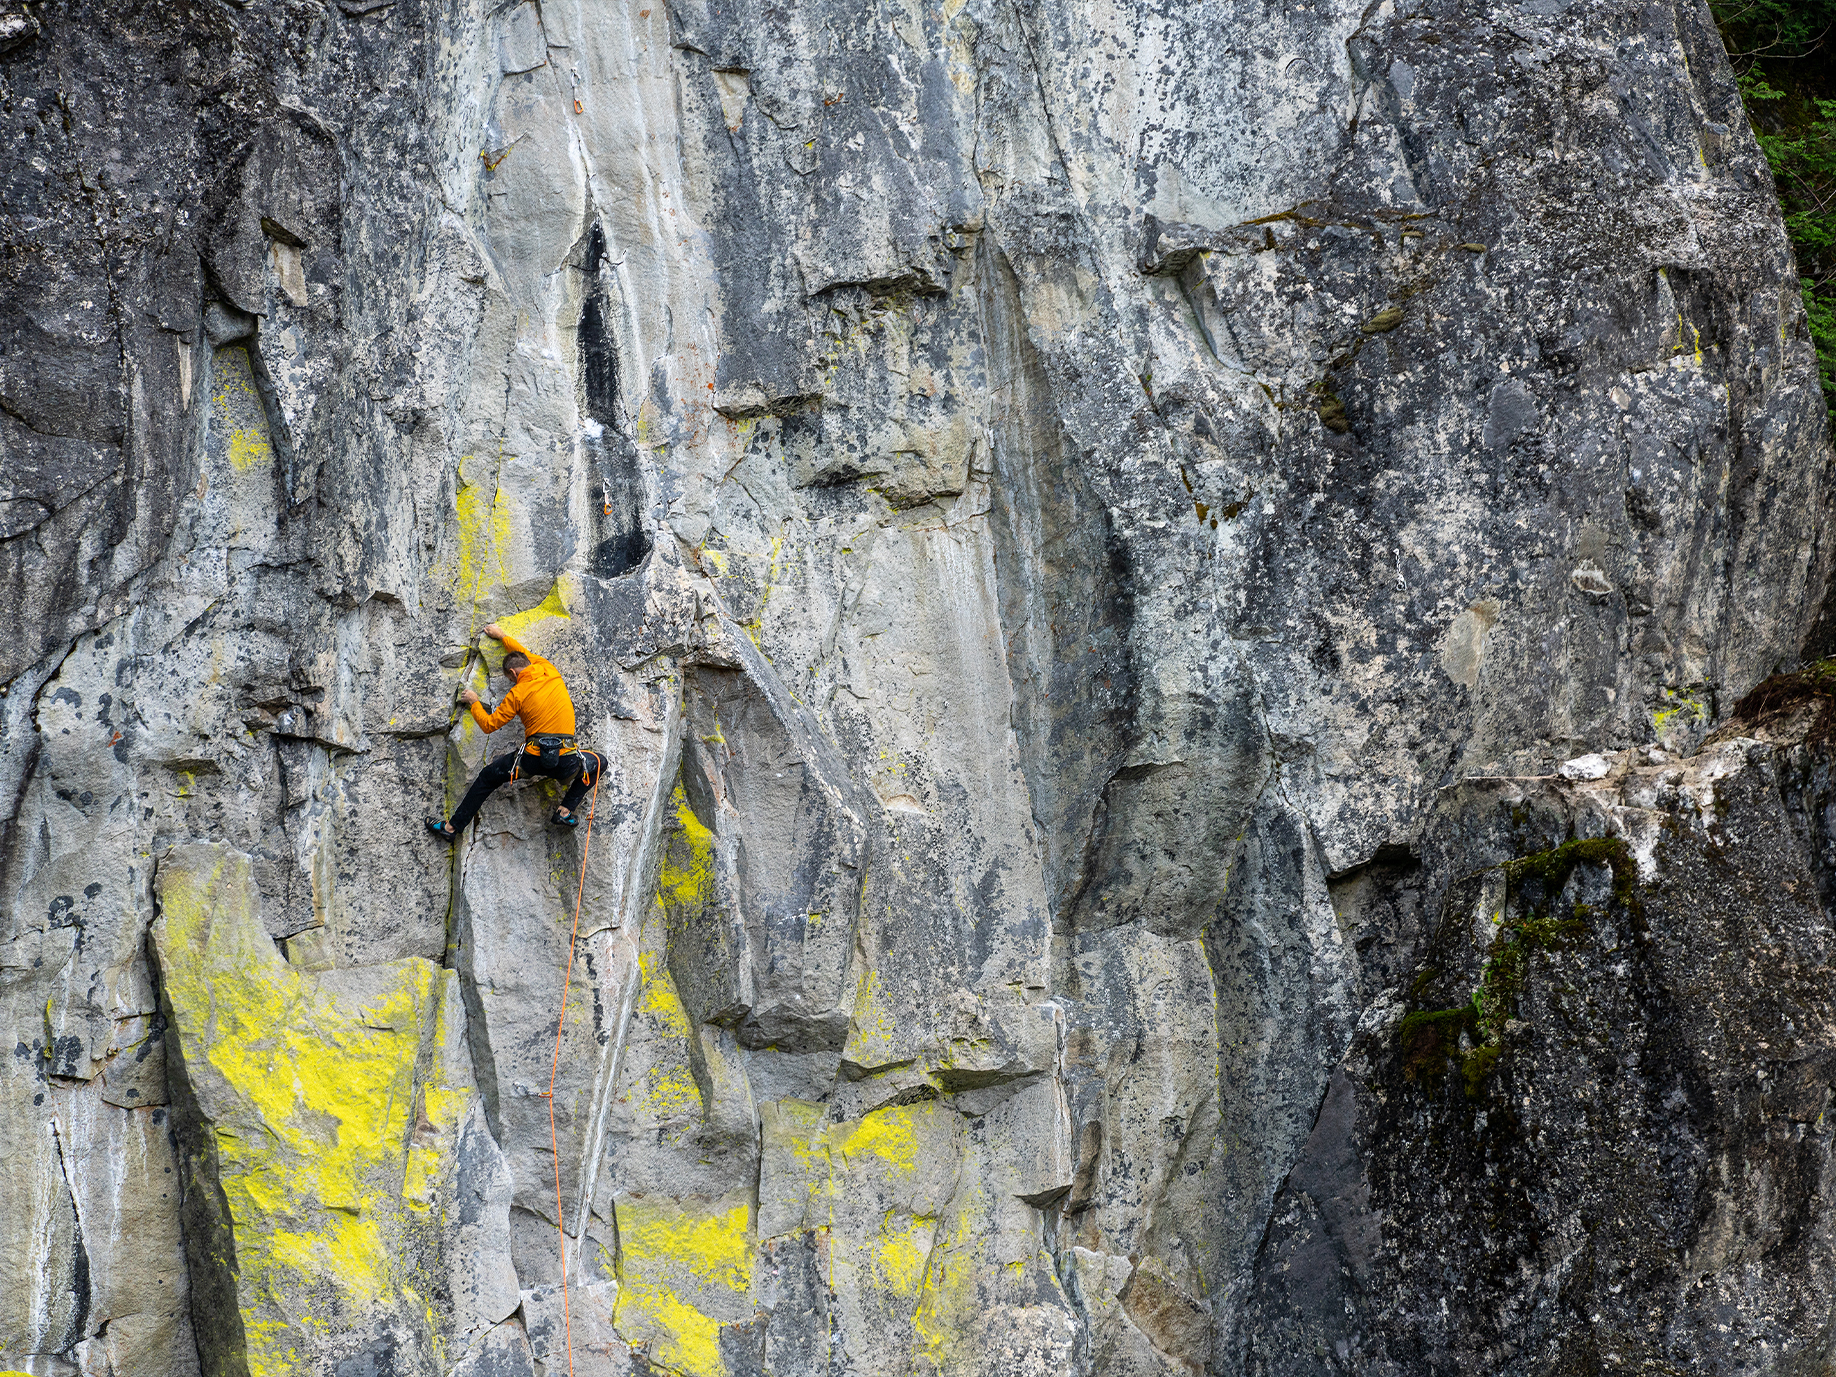 panel13_arcteryx-man-climbing-cliff